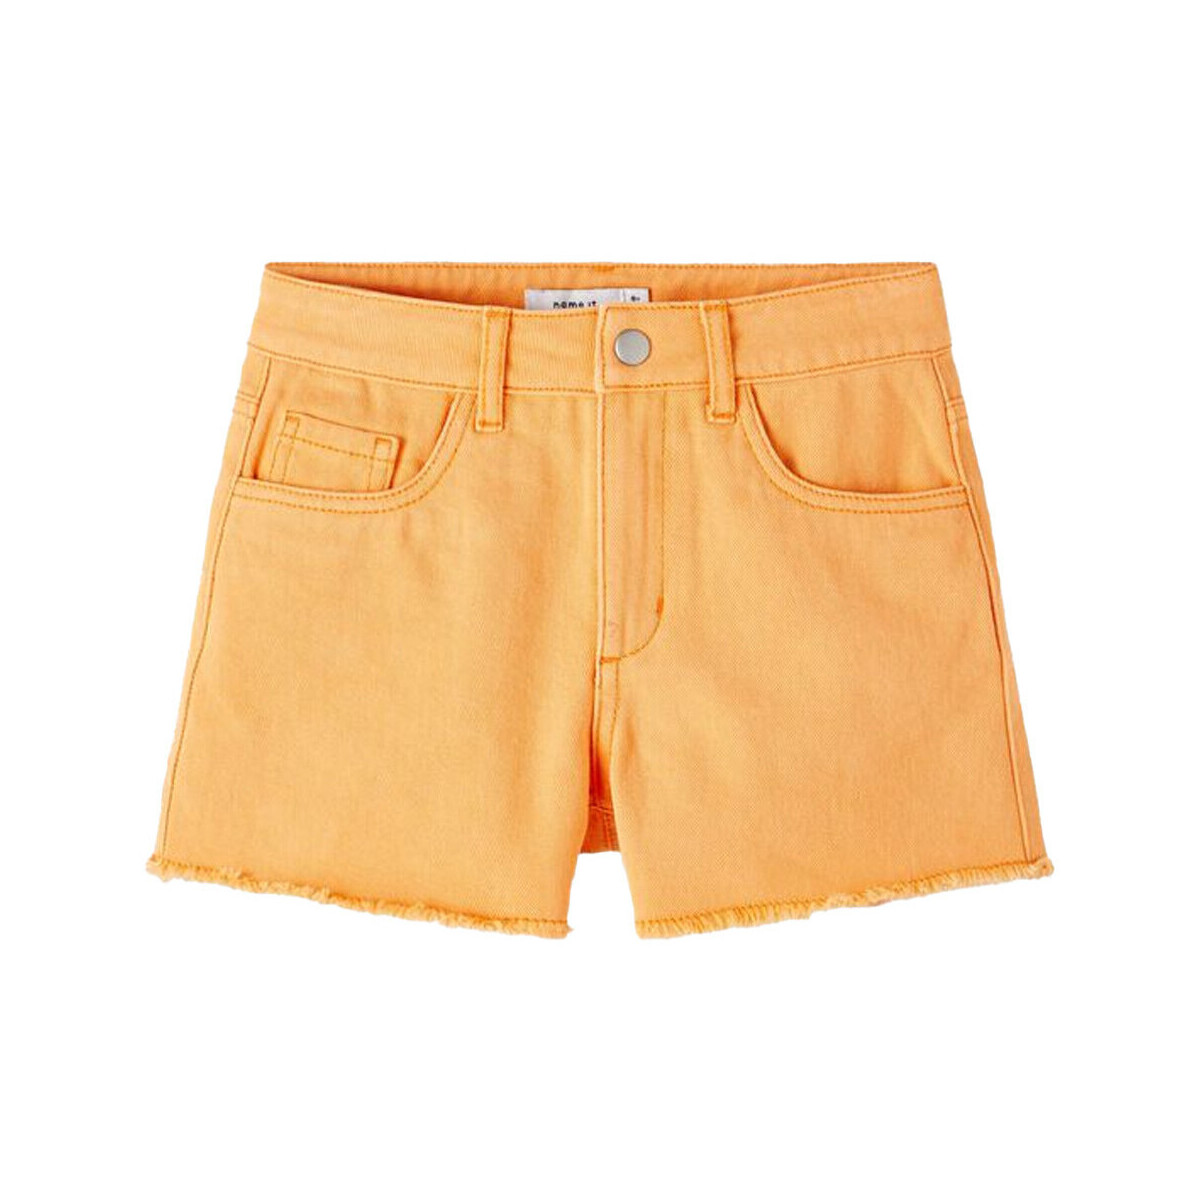 Vêtements Fille Shorts / Bermudas Name it 13213282 Orange